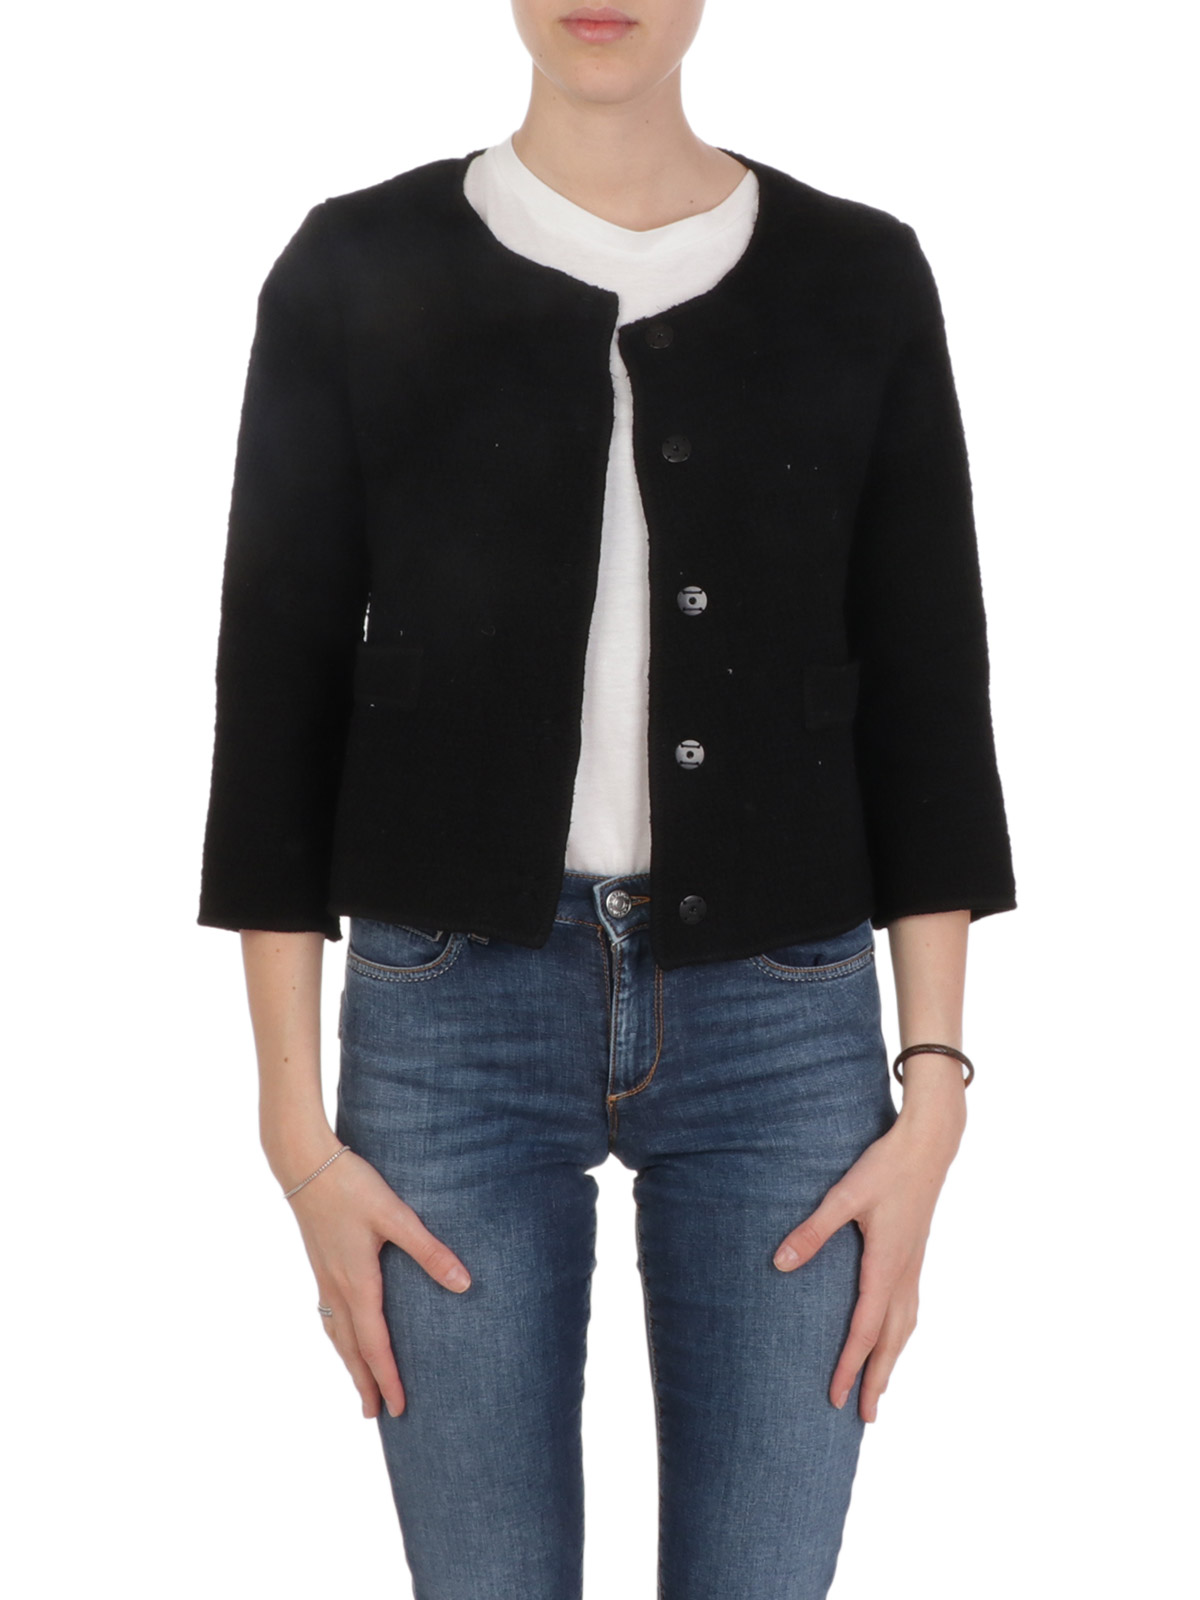 Iro Chanel style jacket  Buy online on Glamest Fashion Outlet   Glamestcom  Online Designer Fashion Outlet